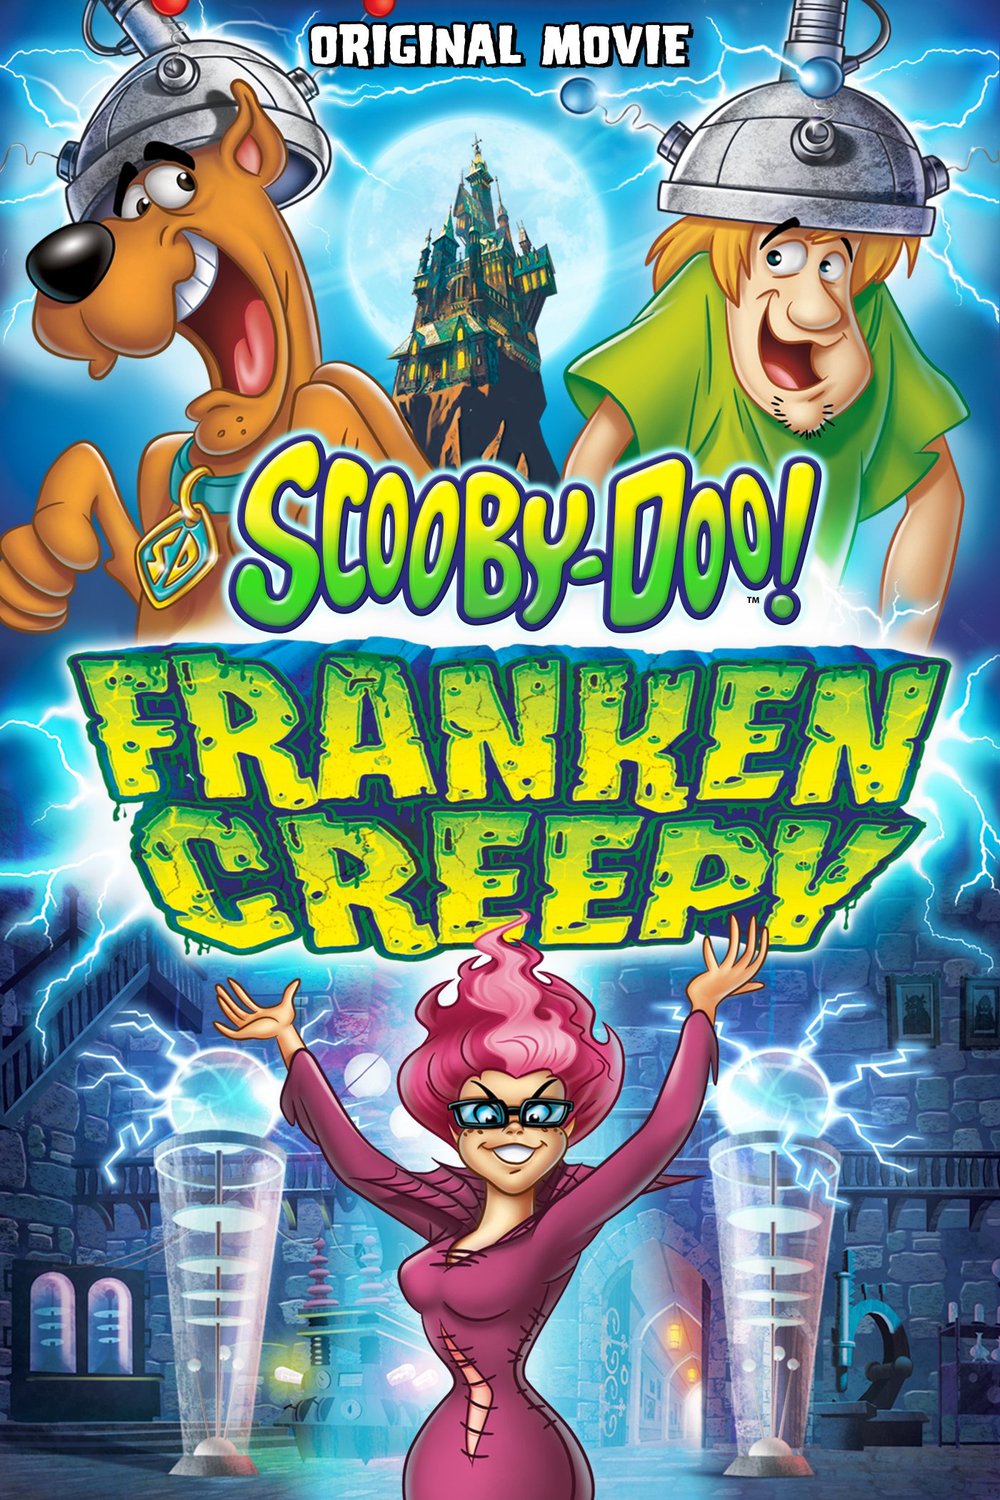 L'affiche du film Scooby-Doo! FrankenCreepy